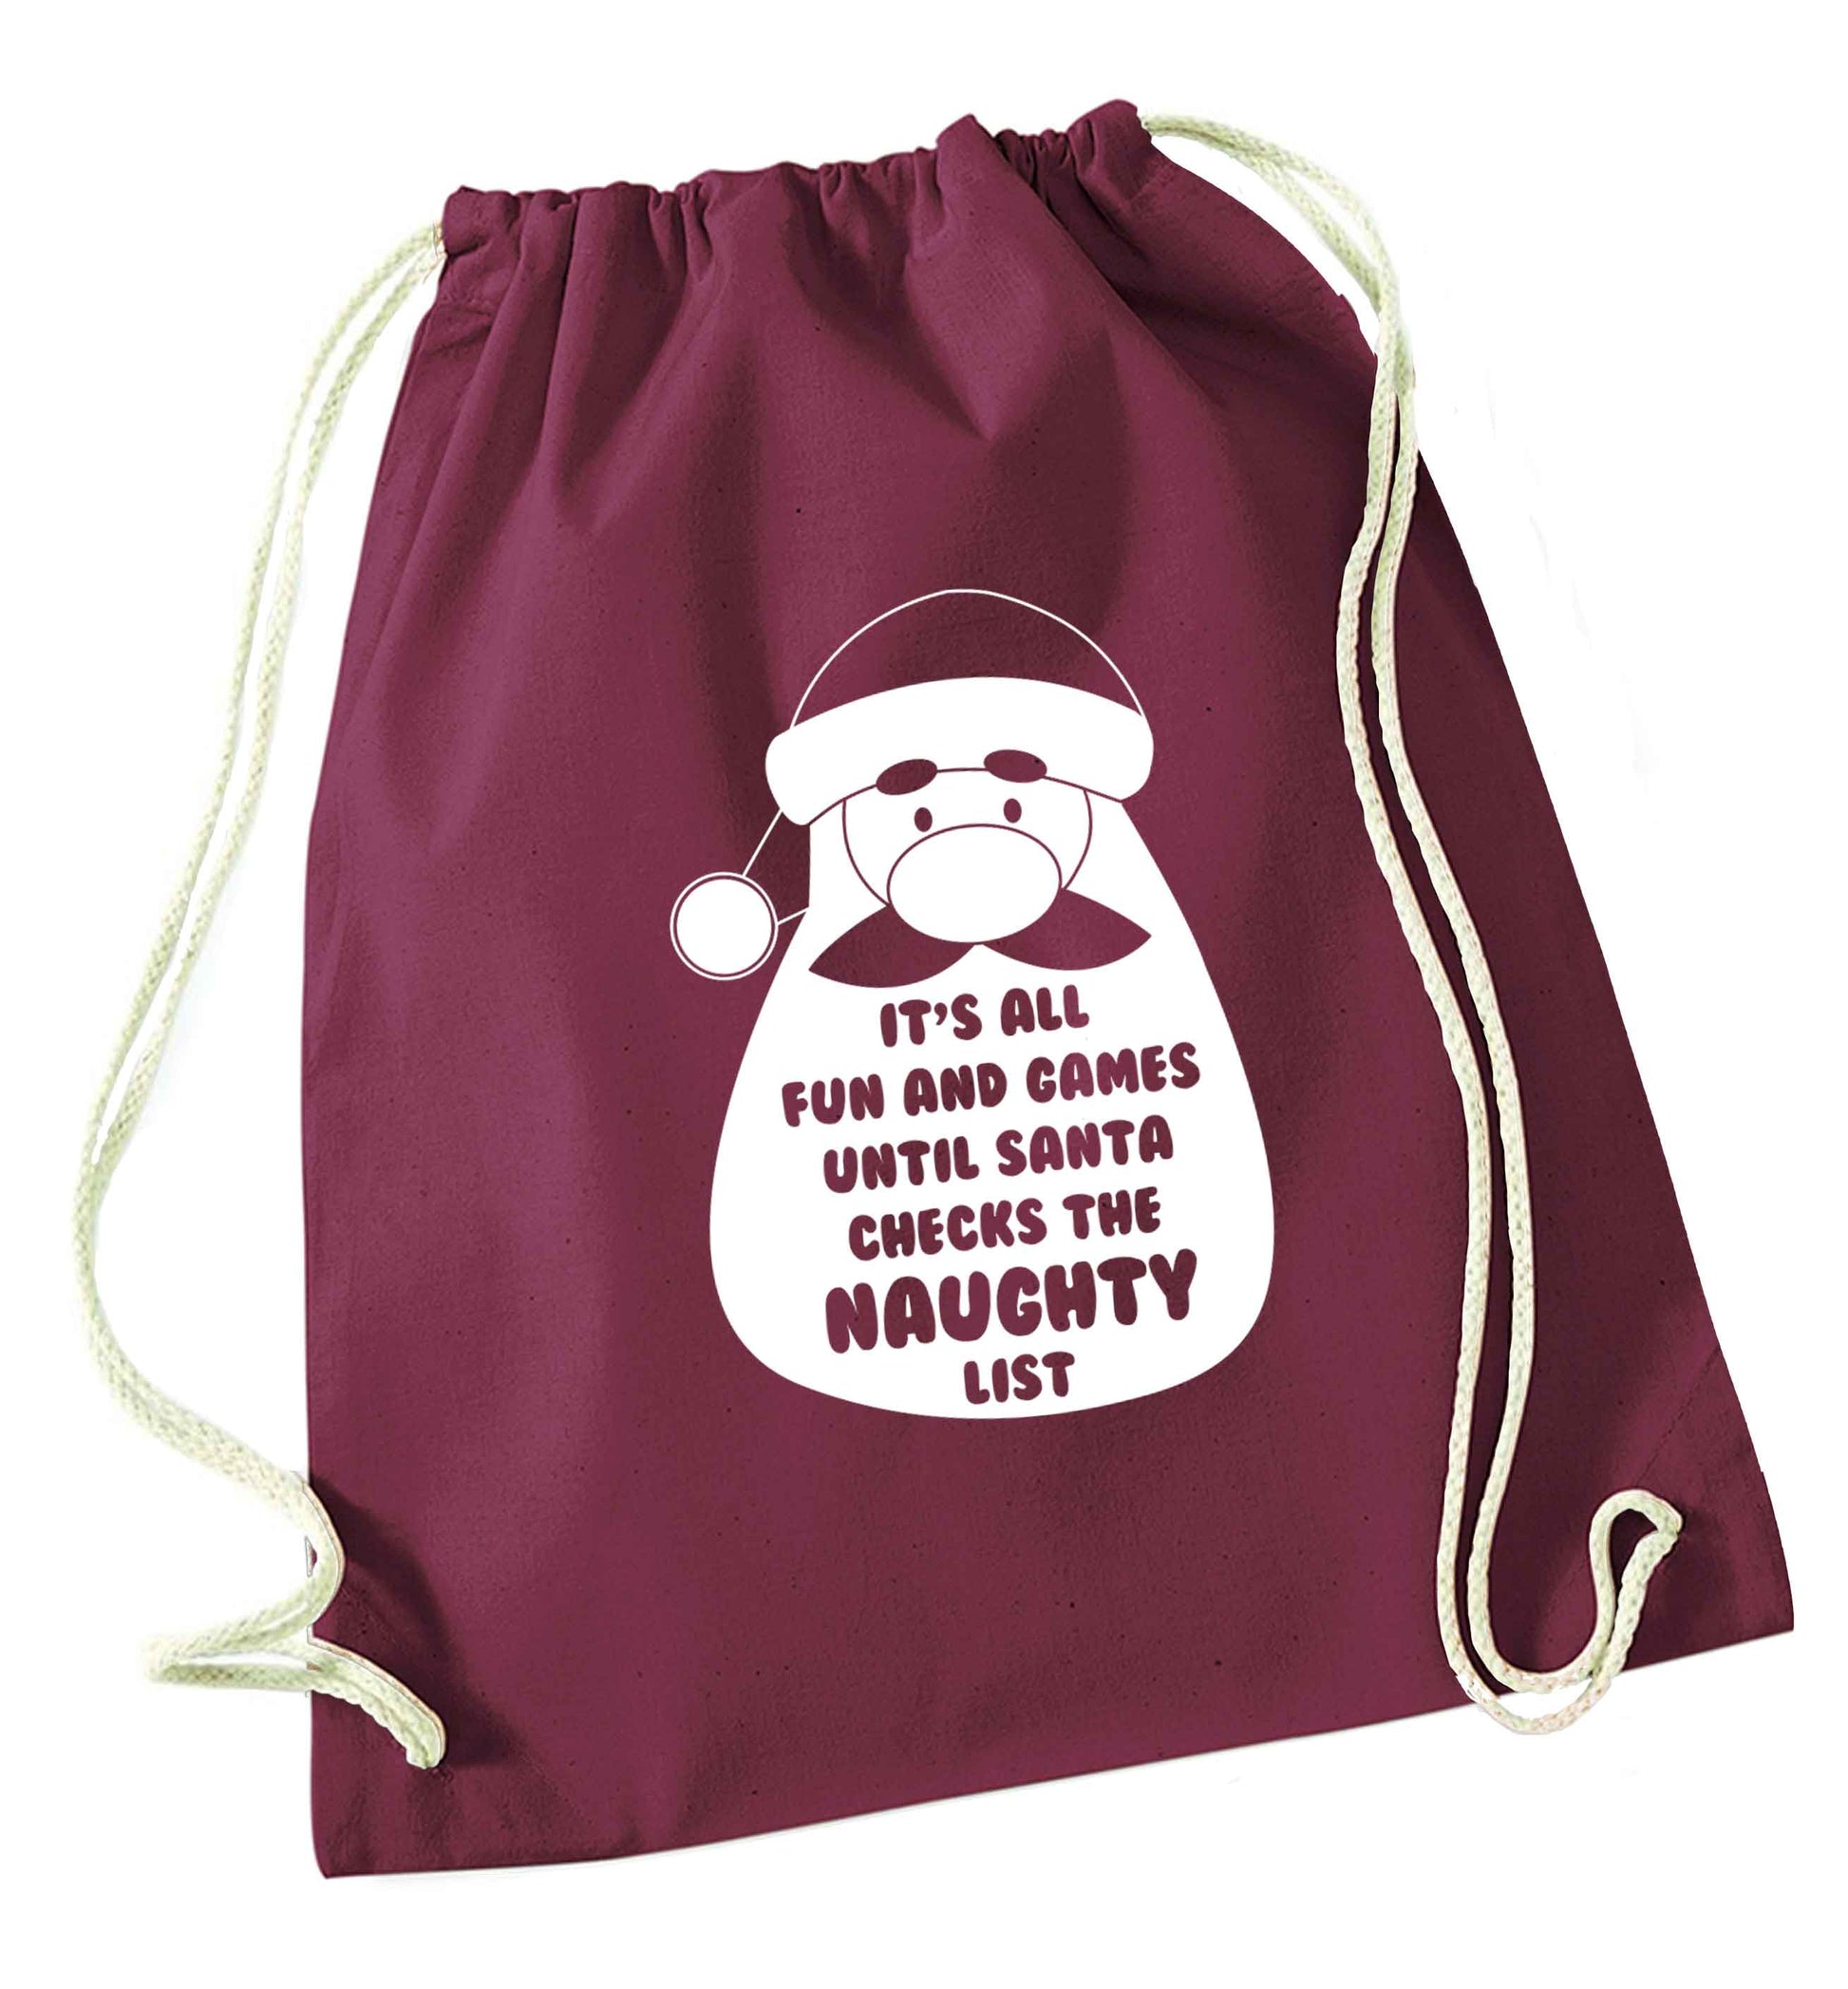 It's all fun and games until Santa checks the naughty list maroon drawstring bag